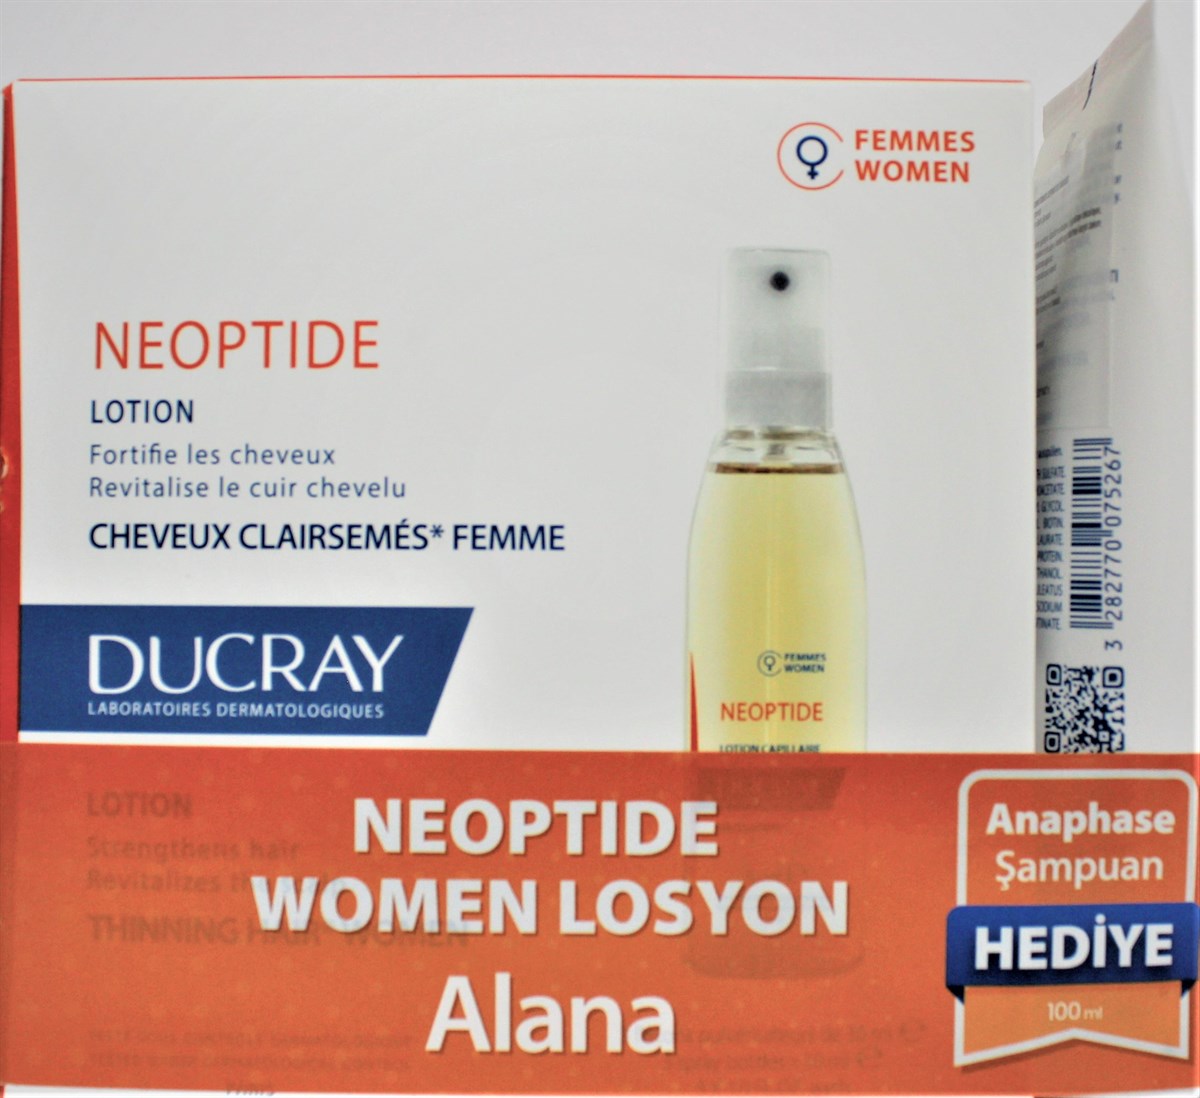 Ducray Neoptide Anti-Hair Loss Lotion 3x30 ml.+ Anaphase Shampoo 100ml  Free-LeylekKapida.com